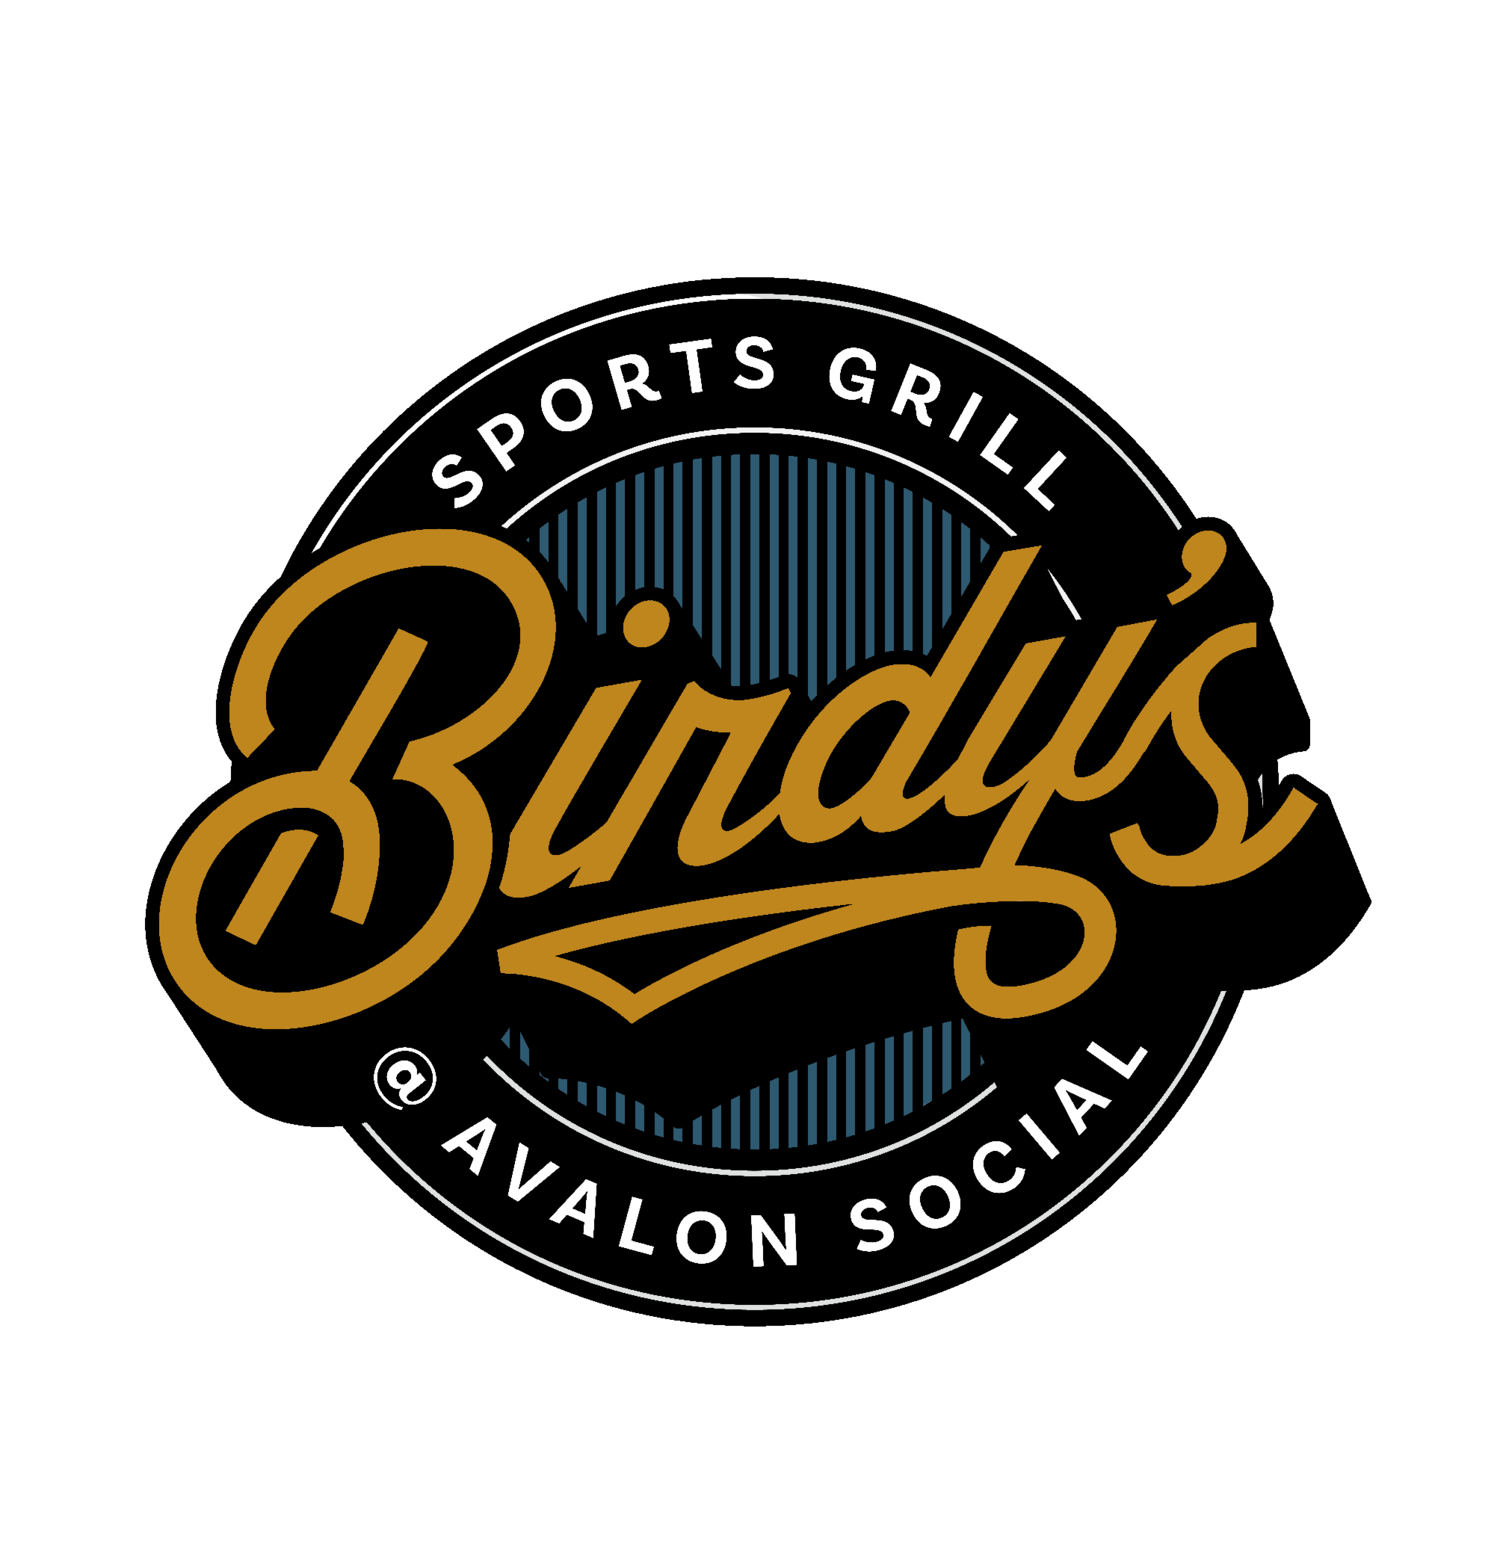 Birdy's Sports Grill